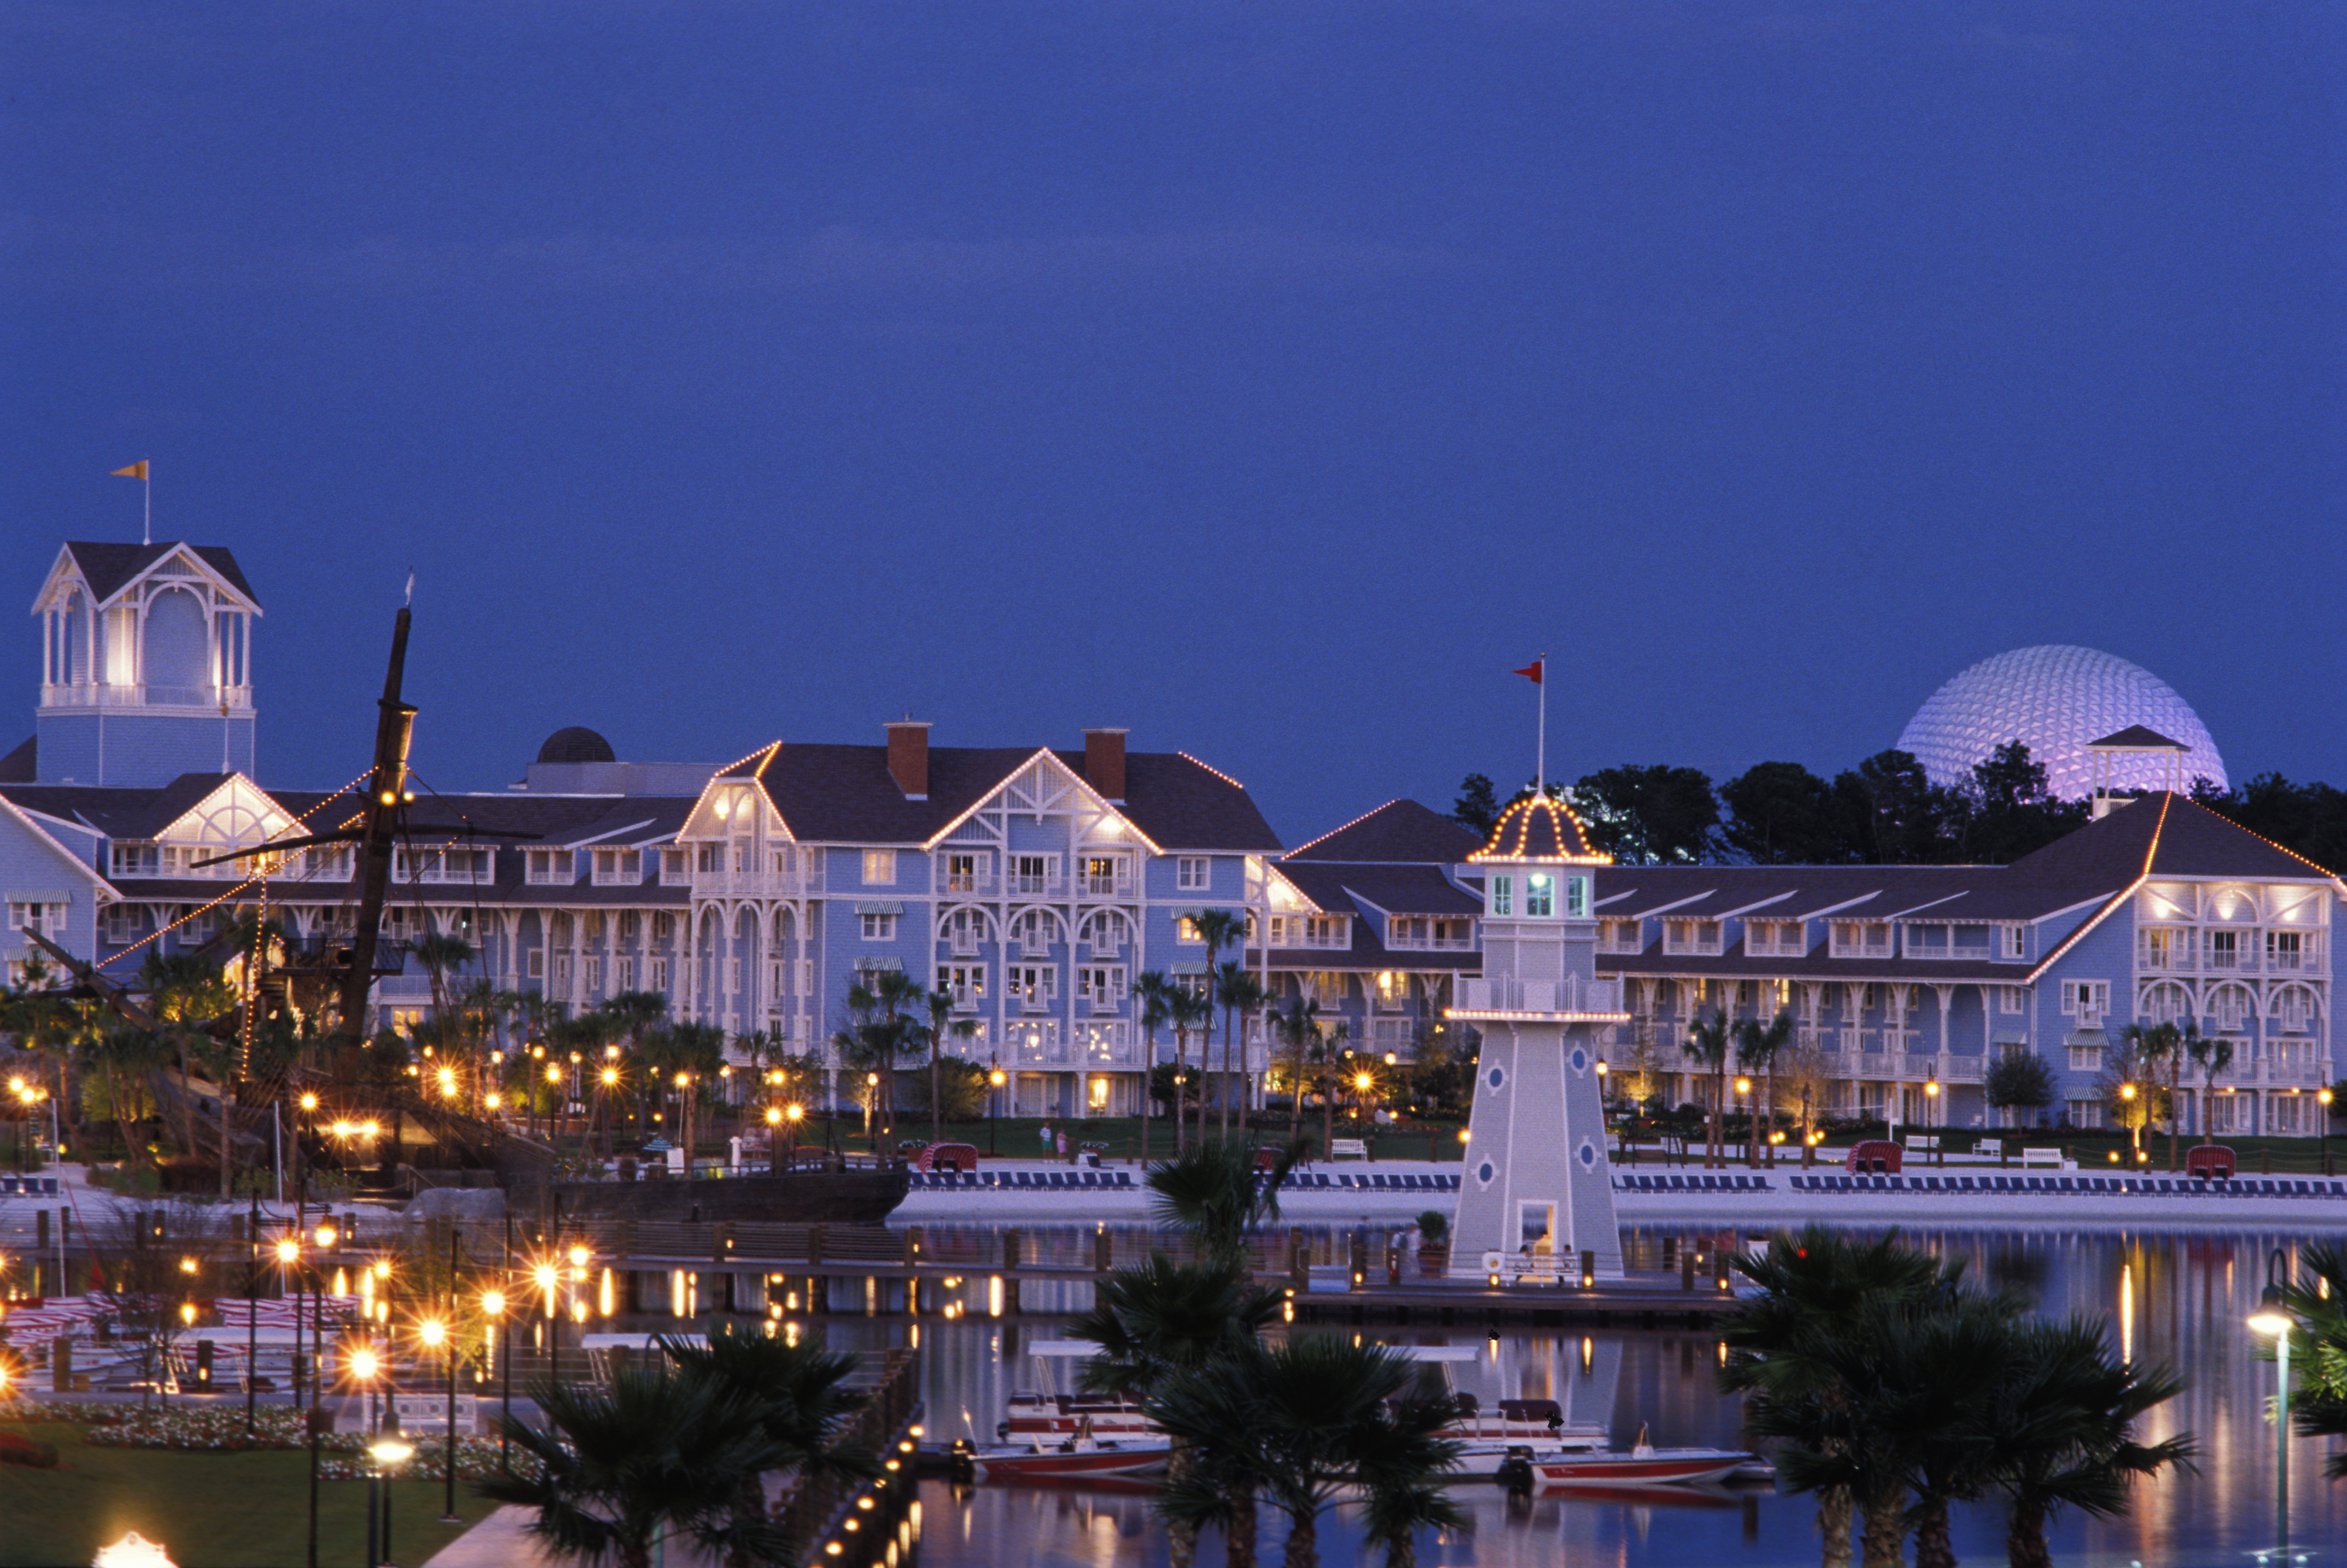 Disney's Yacht Club Resort in Orlando